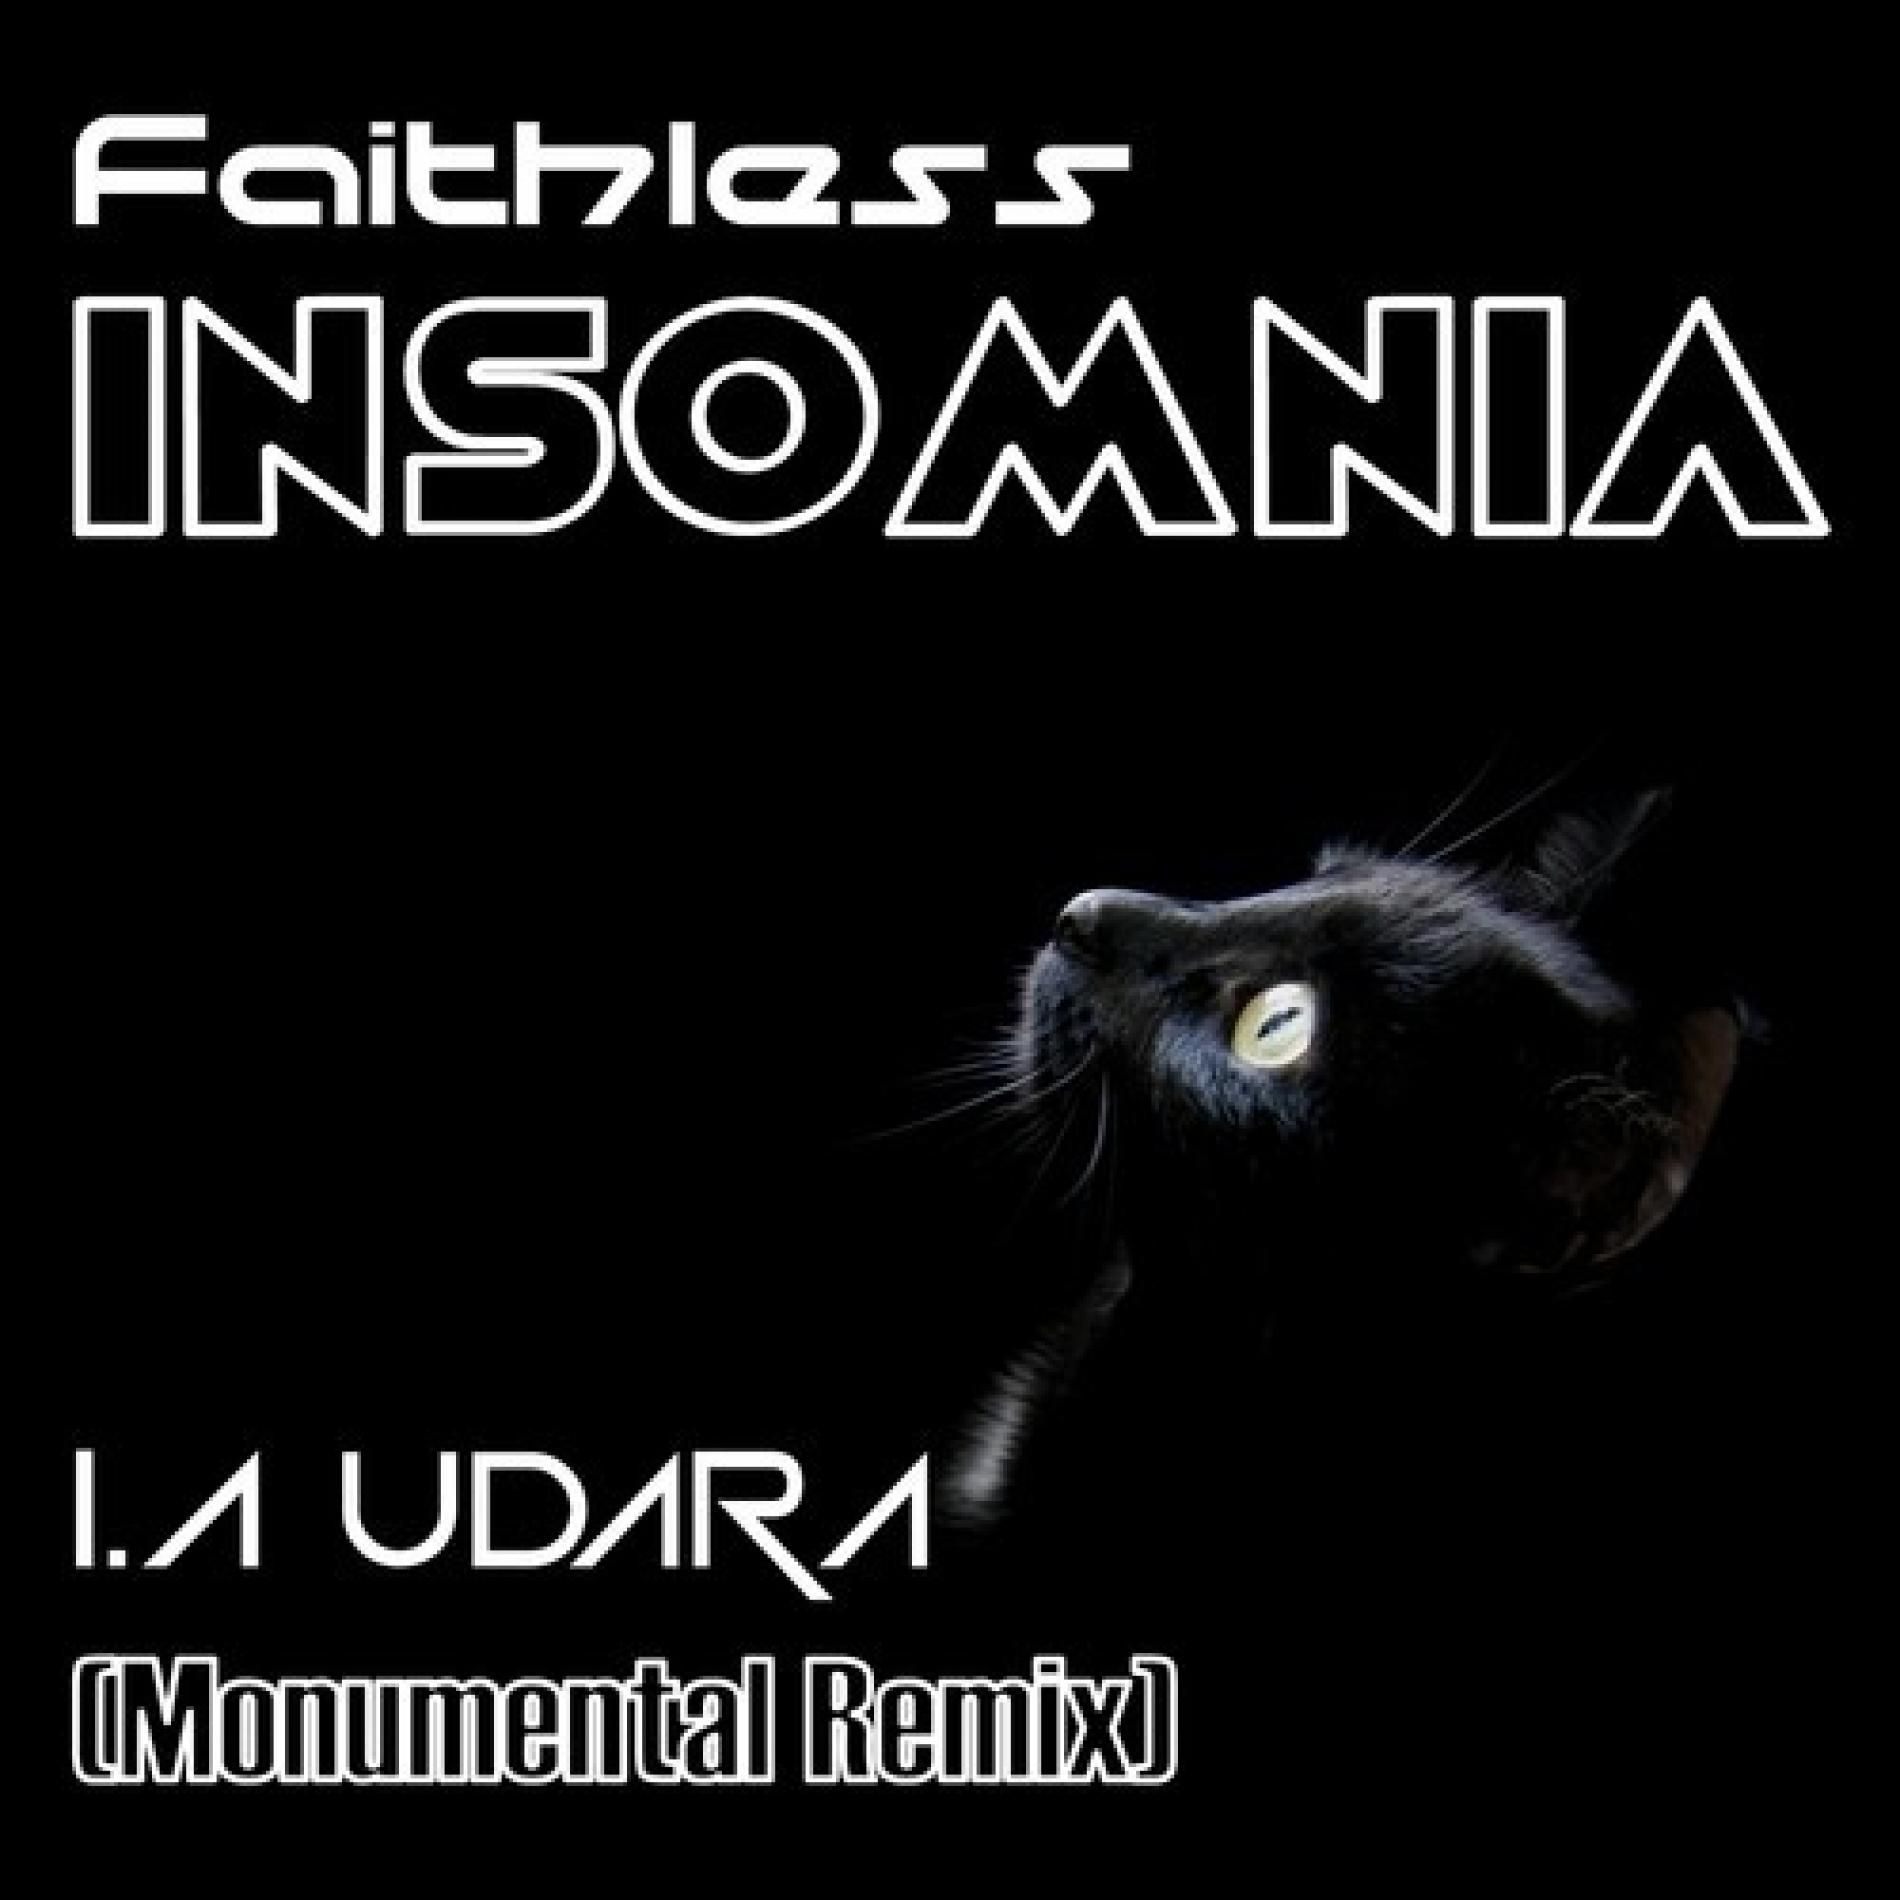 Faithless – Insomnia (I.A Udara Monumental Remix)